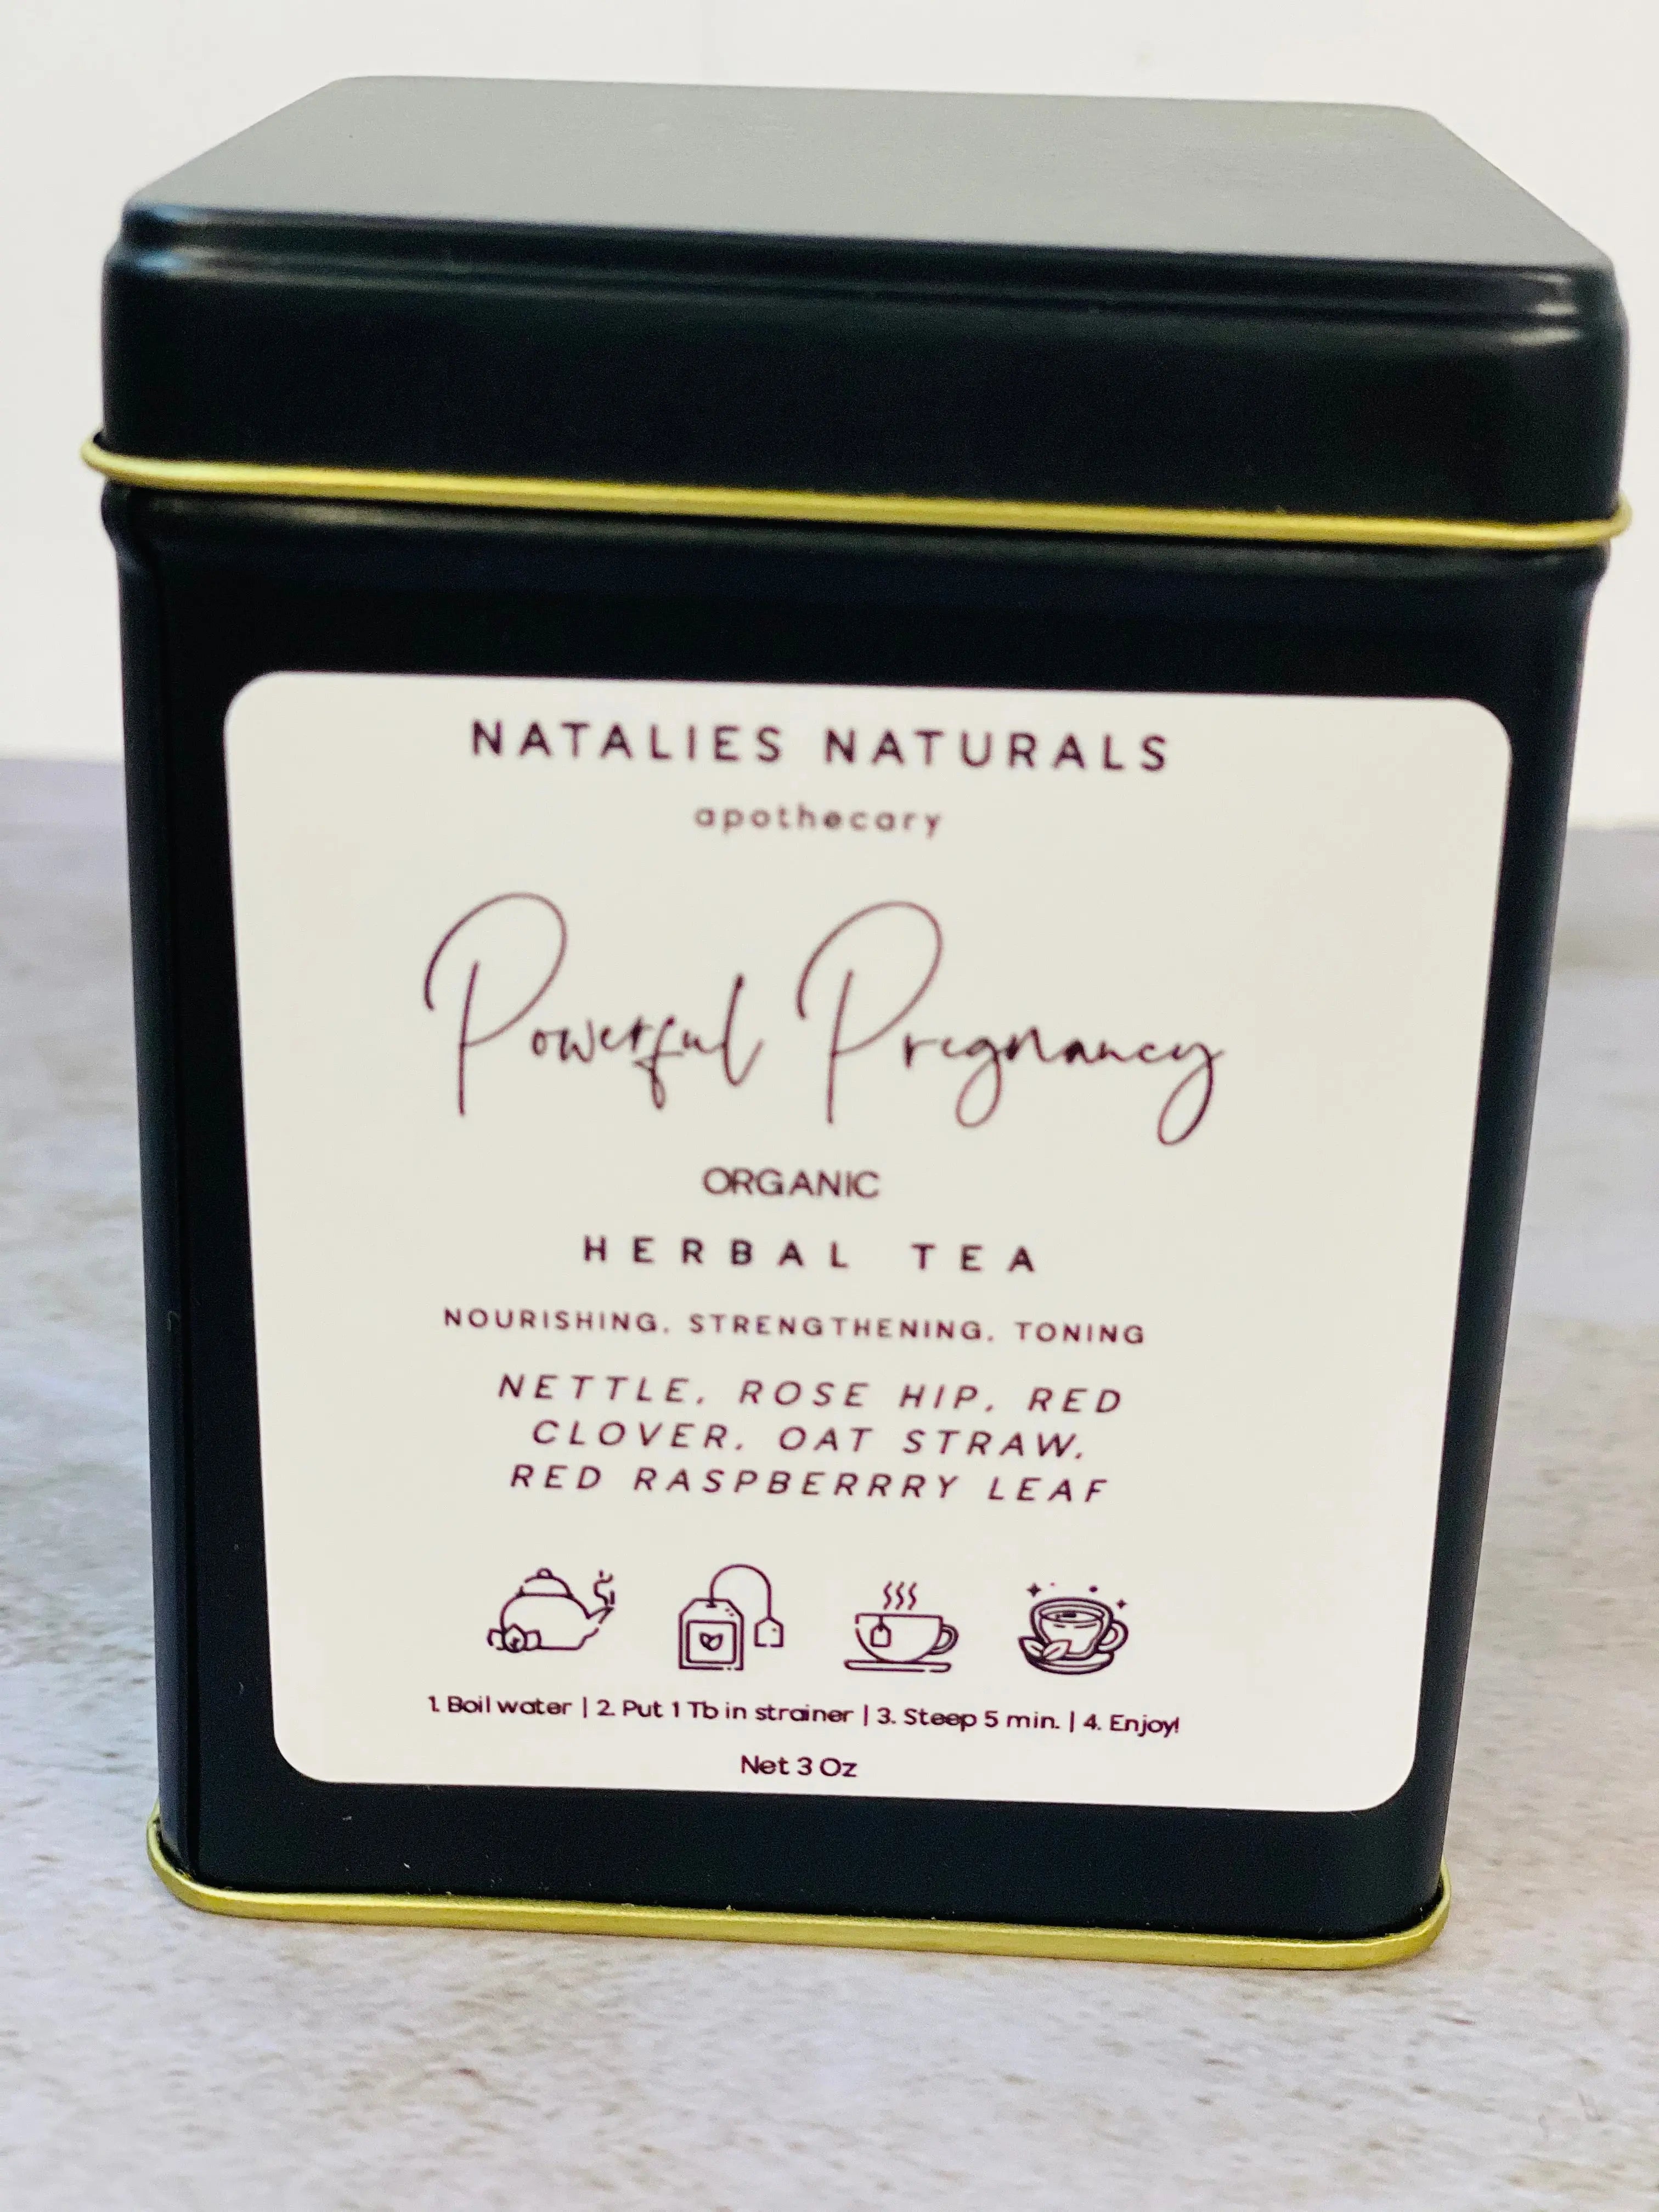 Powerful Pregnancy tea Natalies Naturals Apothecary